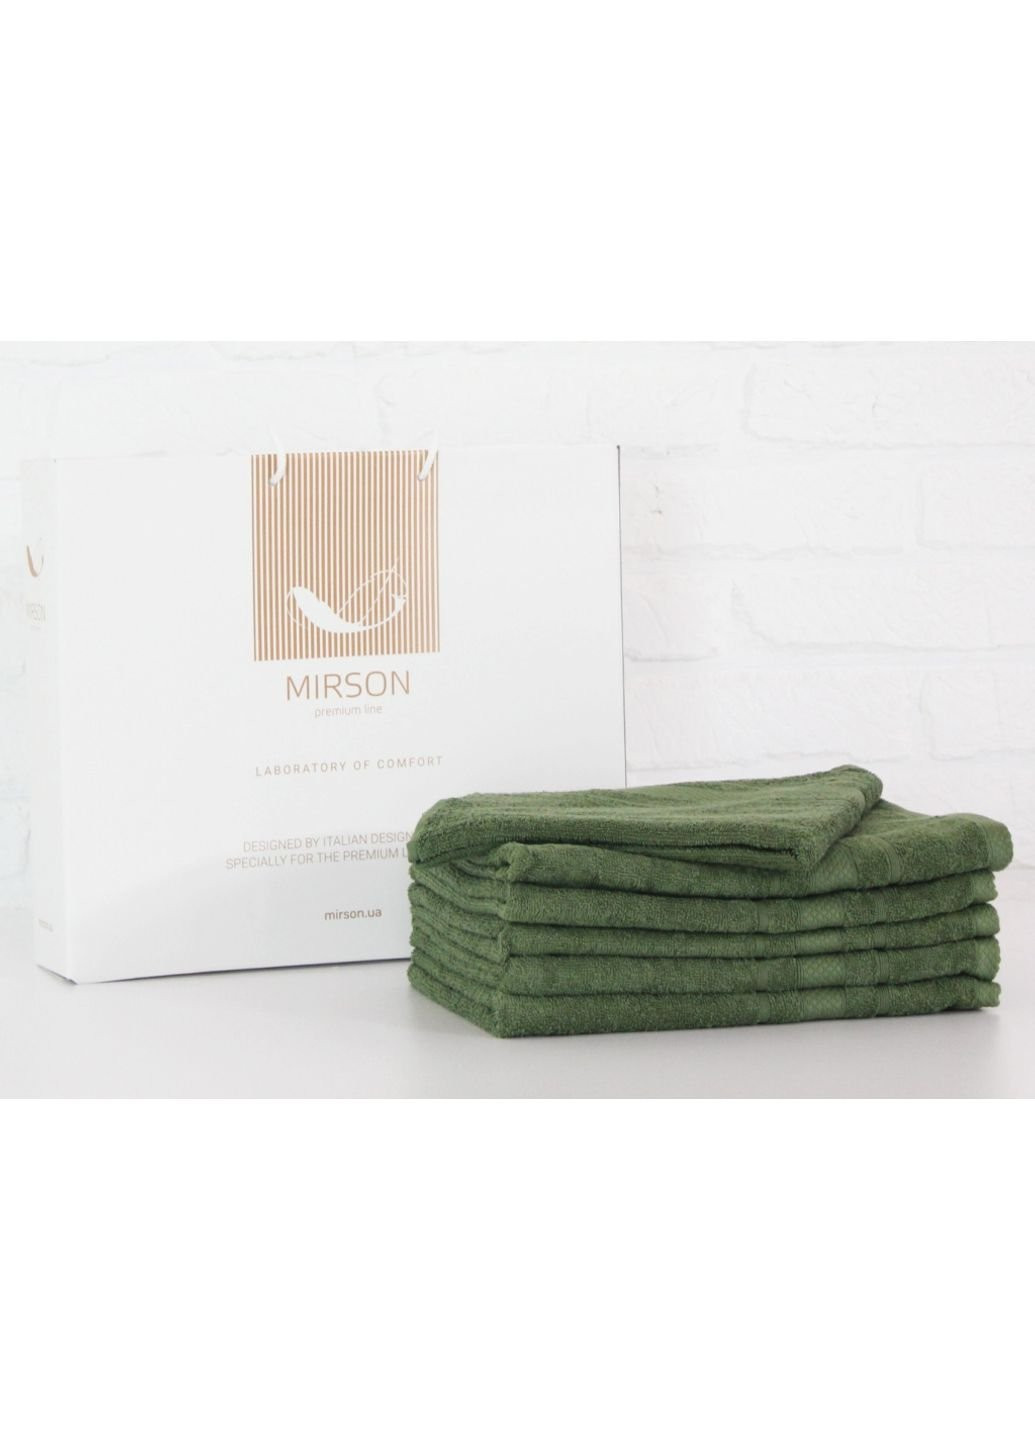 Mirson полотенце набор банных №5079 elite softness military 50х90 6 шт (2200003524031) зеленый производство - Украина